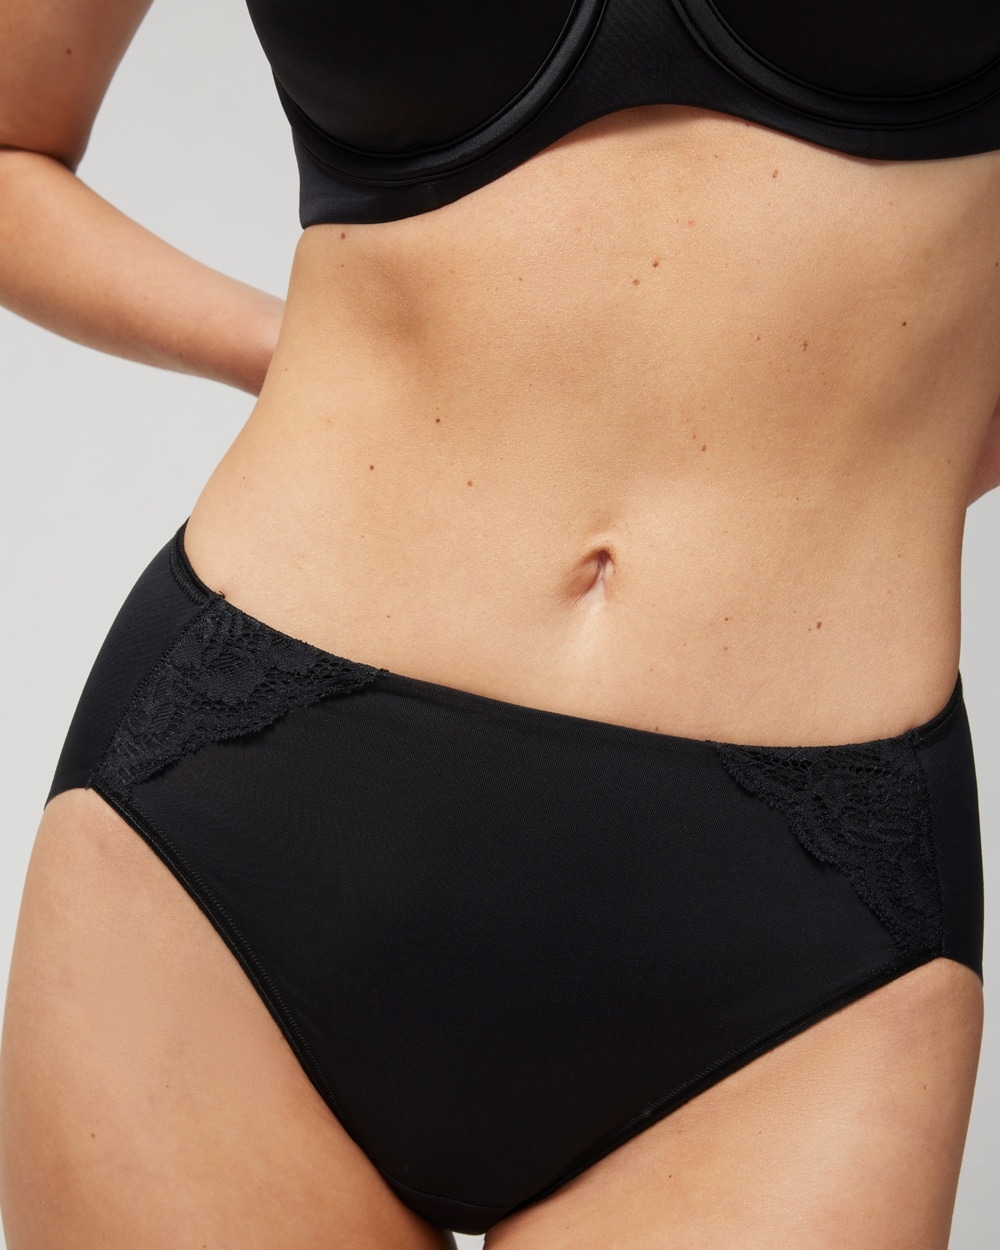 Soma Vanishing Tummy High-Leg Shaping Brief Underwear with Lace, Black, size S